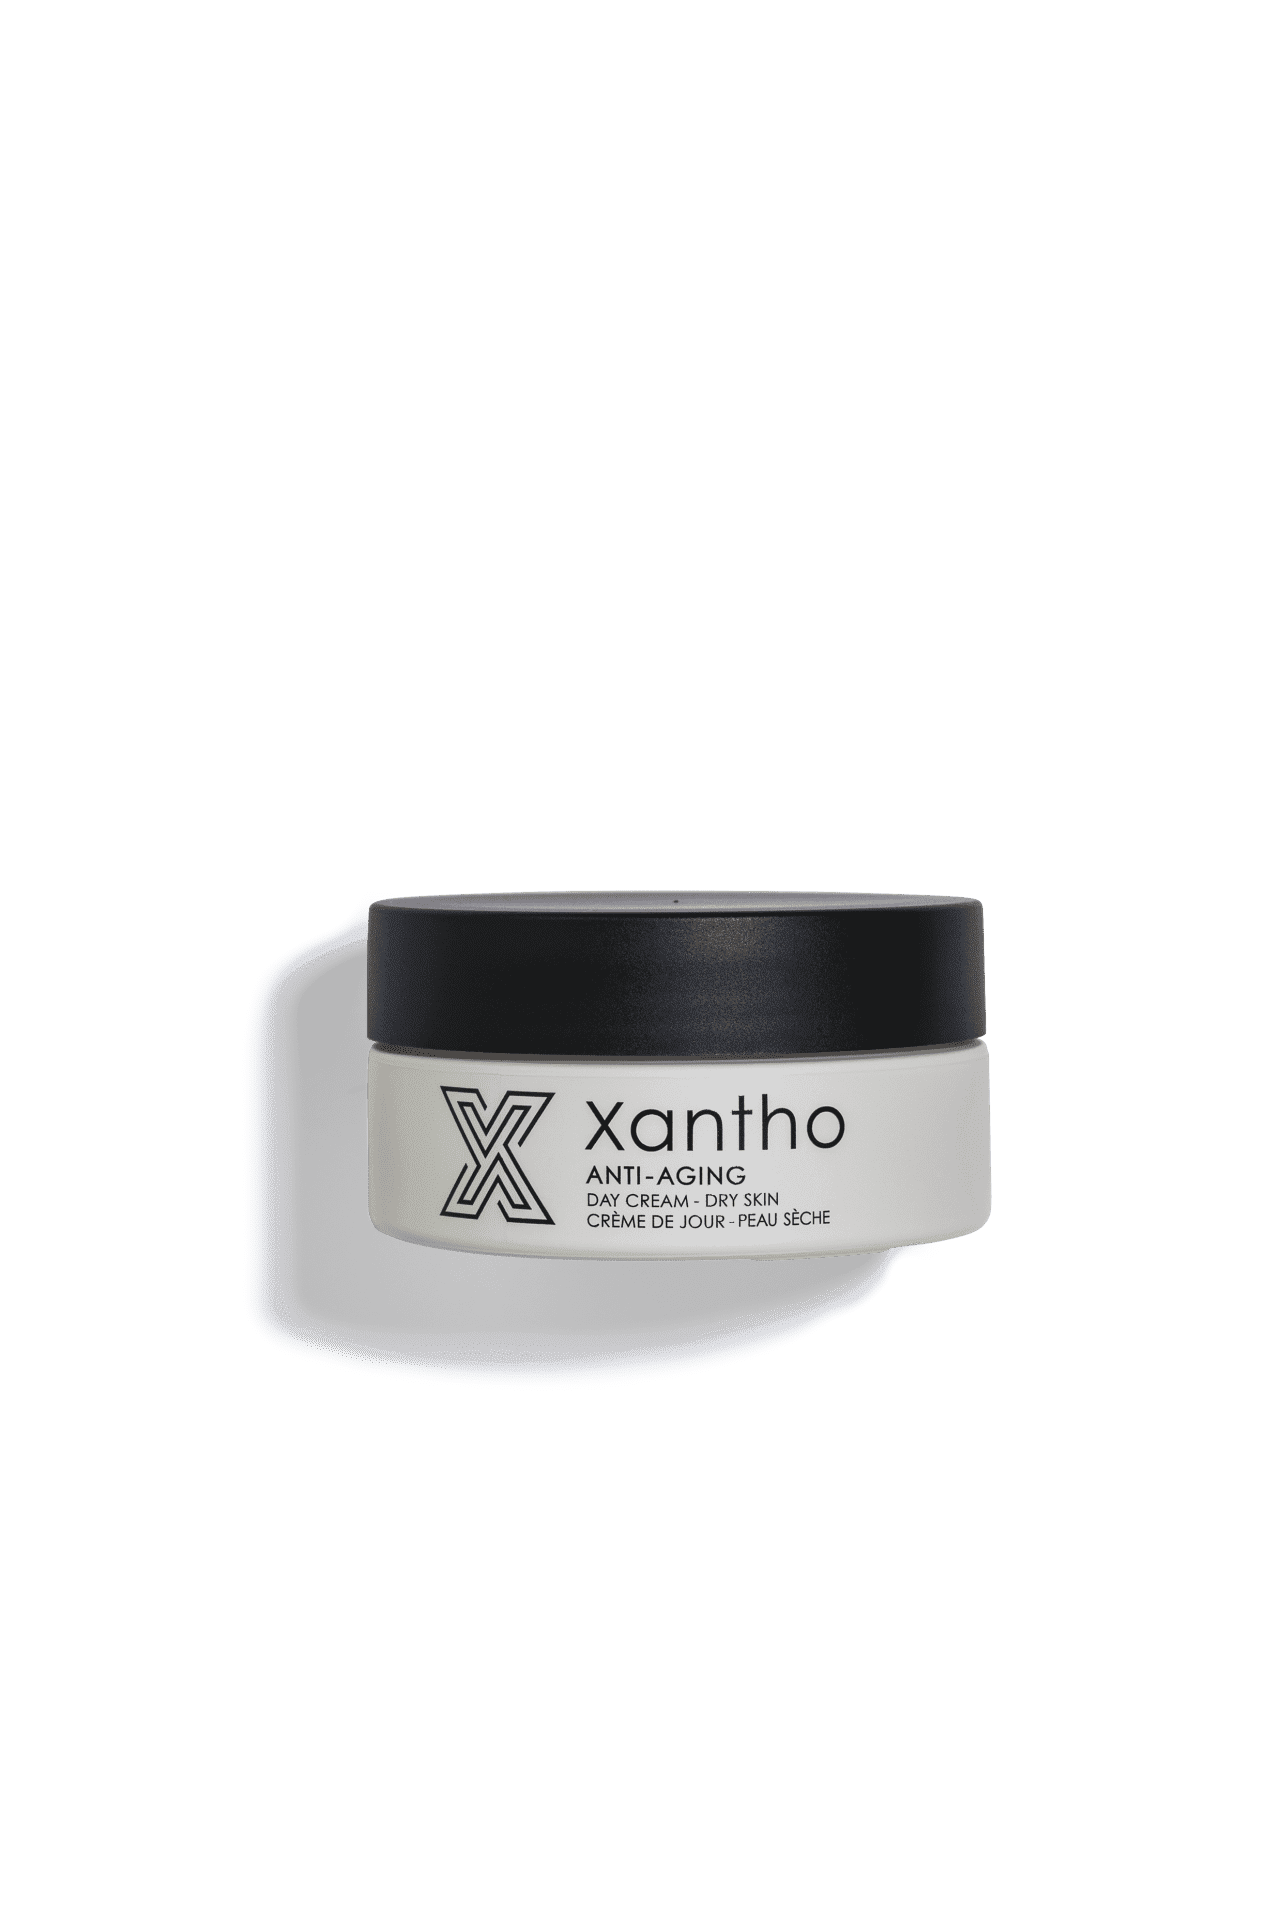 Xantho Travel Kit Dagcrème droge huid